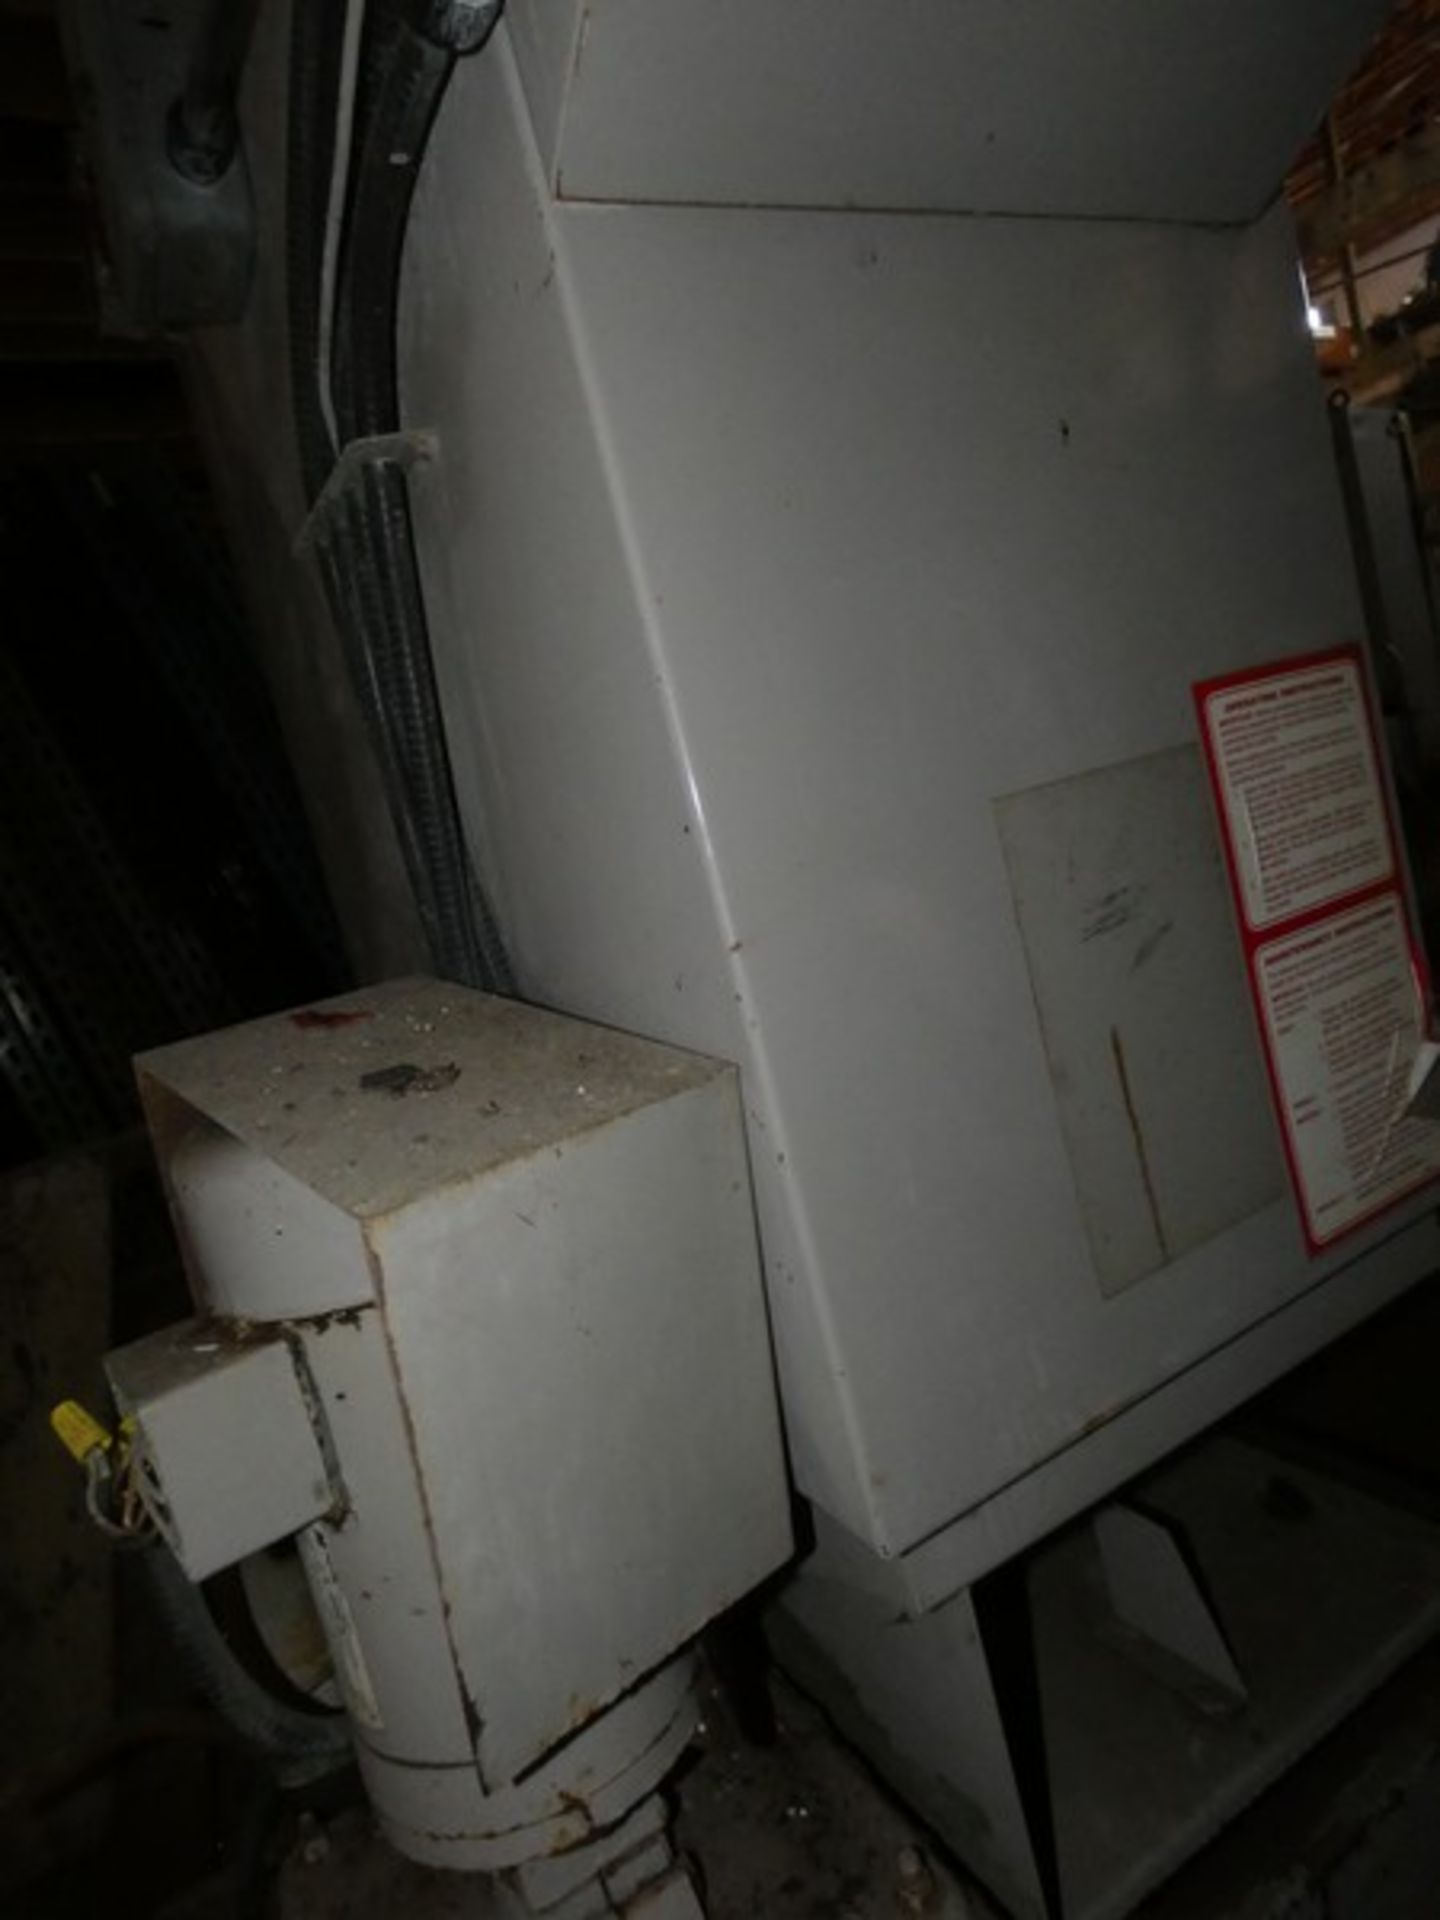 XO336 Parts Washer (Loading Fee $25) (Located Lebanon, PA) - Image 2 of 4